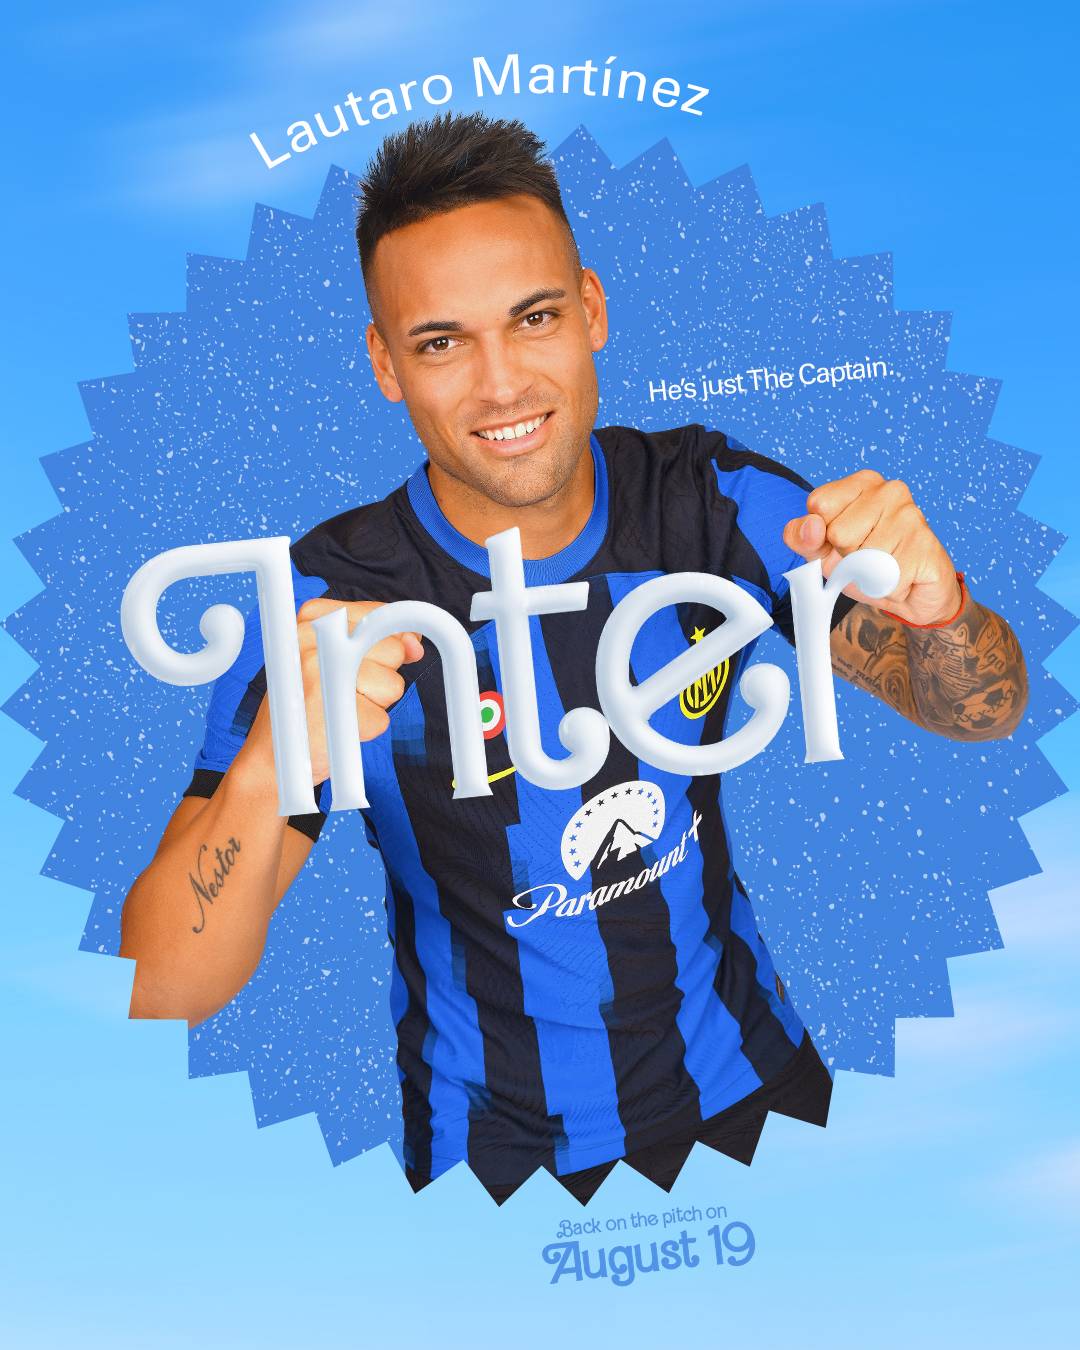 Inter (Twitter)